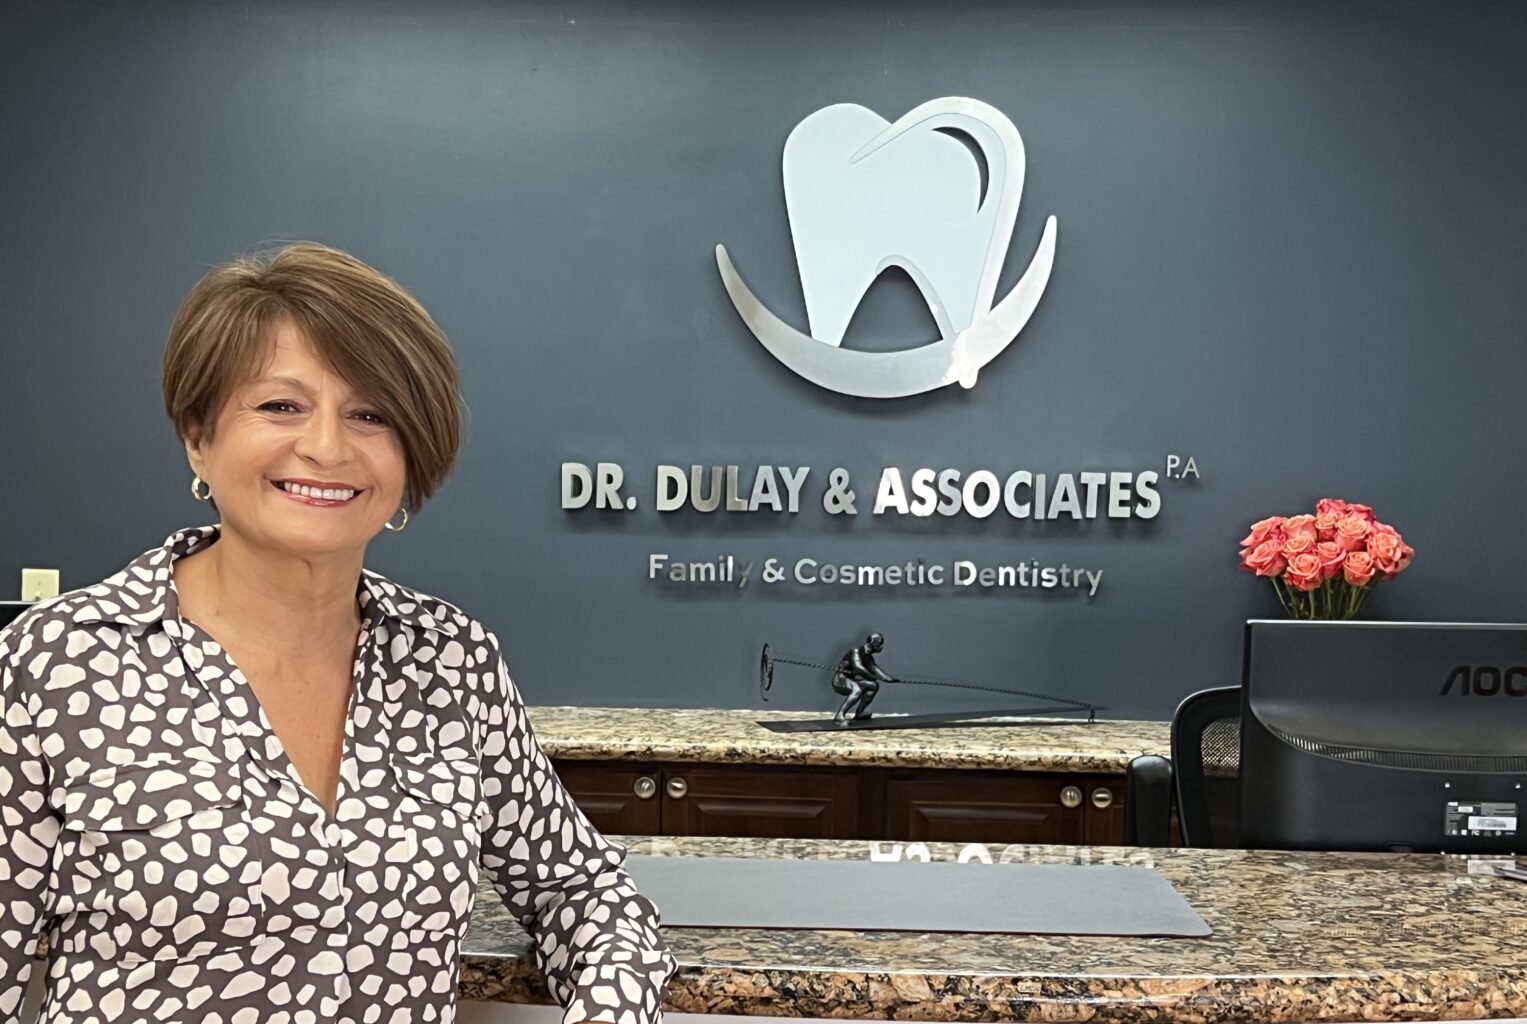 Dr. Dulay and Associates Dental Hygienist - Connie